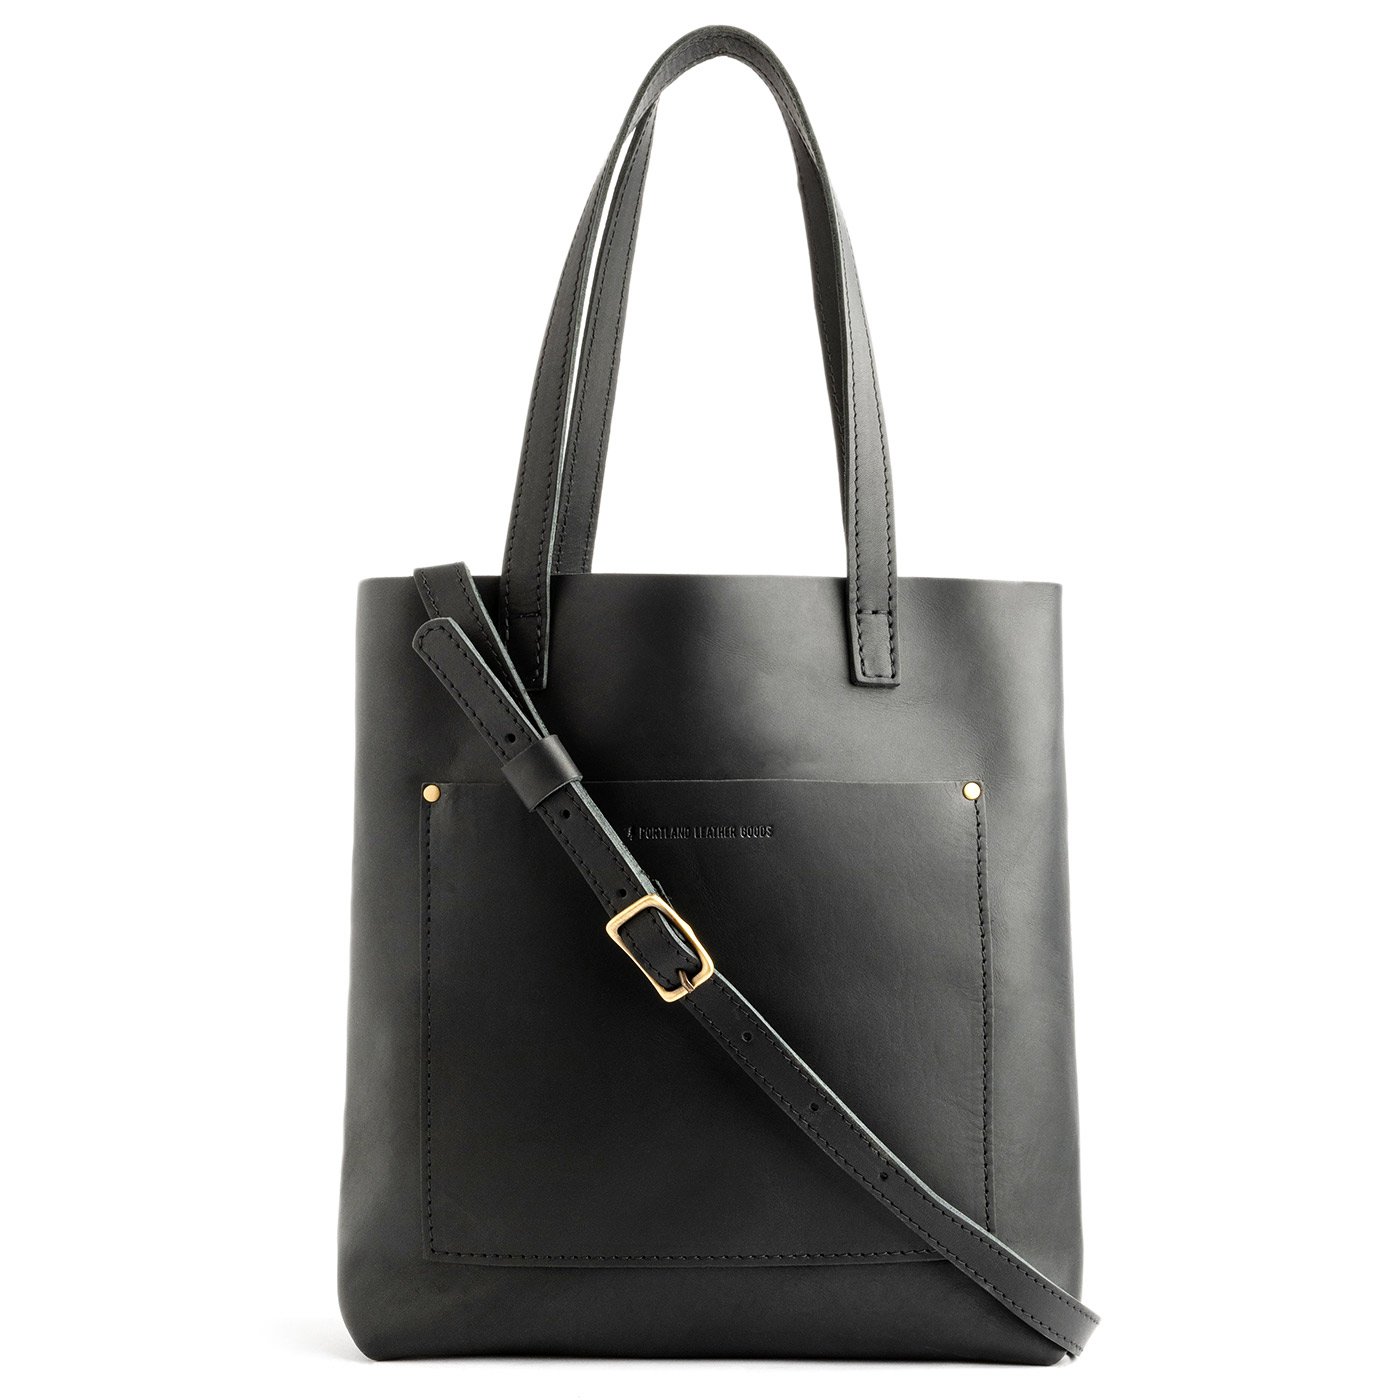 All Color: Black | handmade leather crossbody tote bag zipper